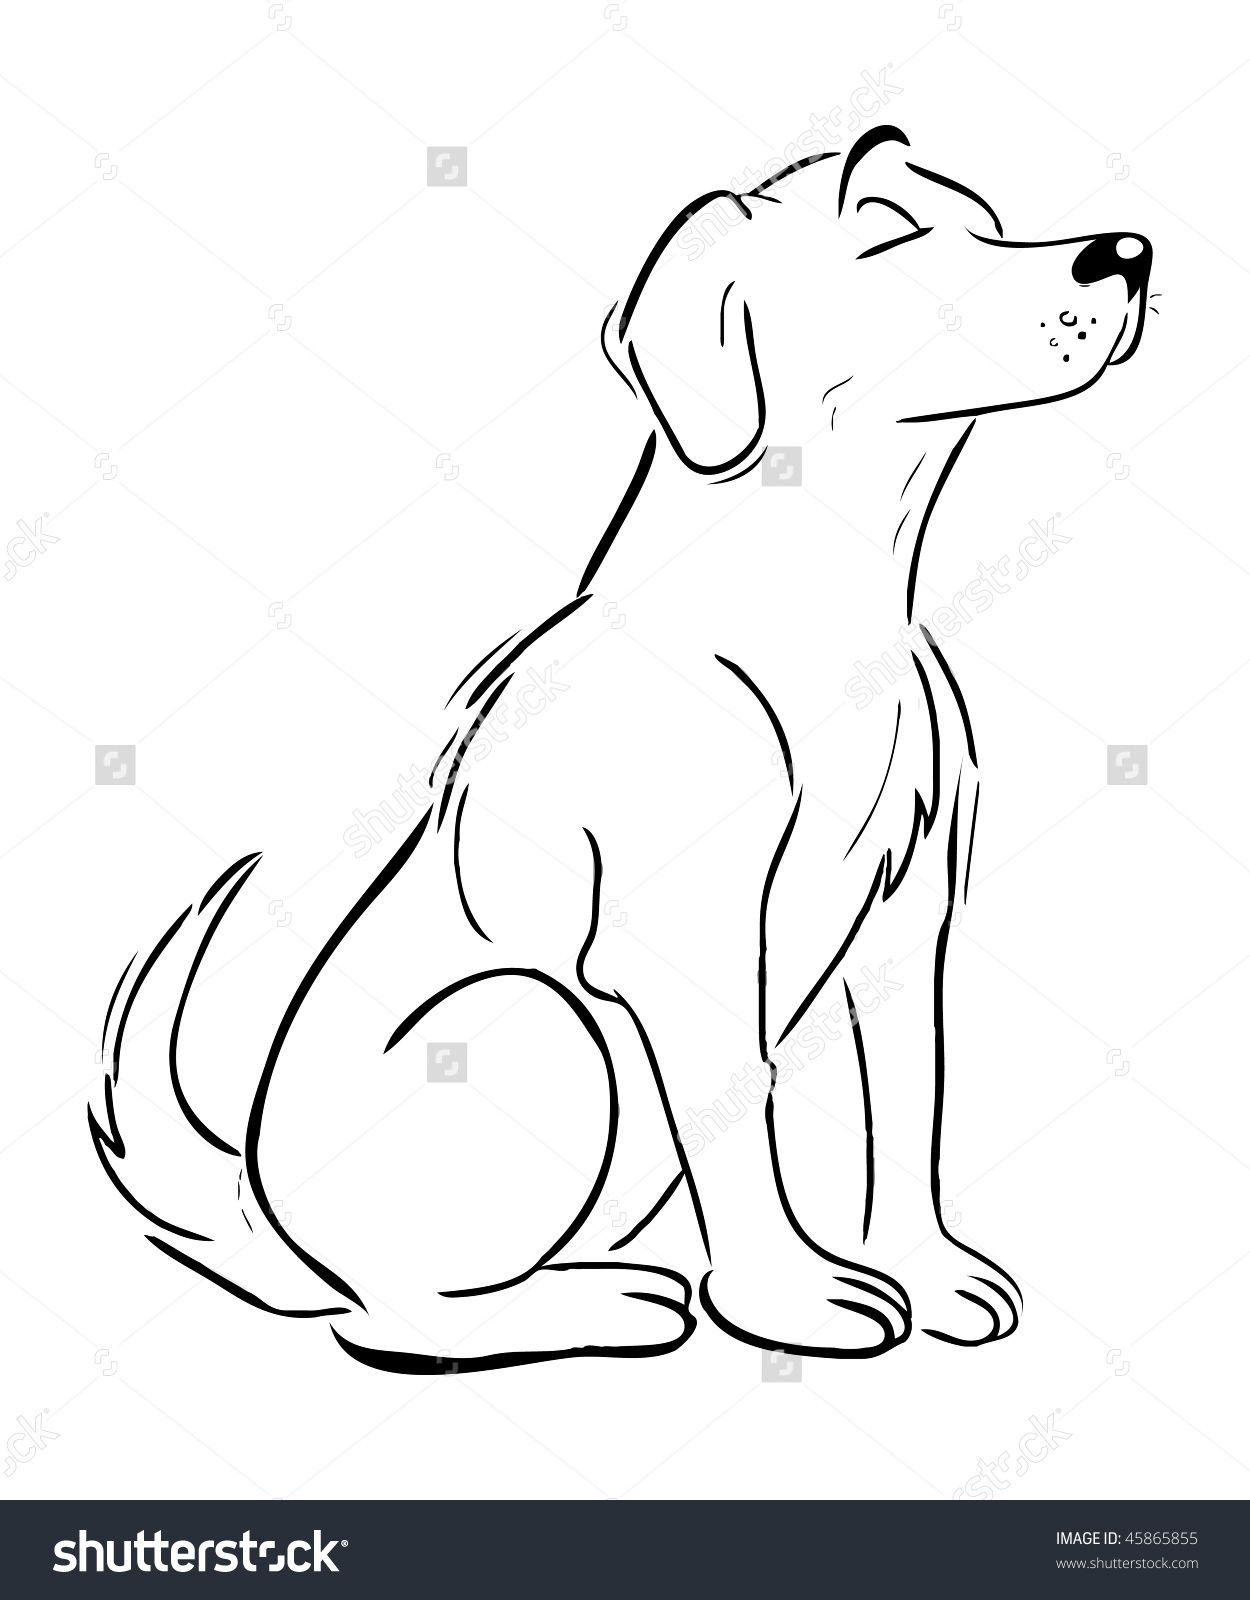 Dessin #1105 - Coloriage Labrador À Imprimer - Oh-Kids serapportantà Coloriage Labrador